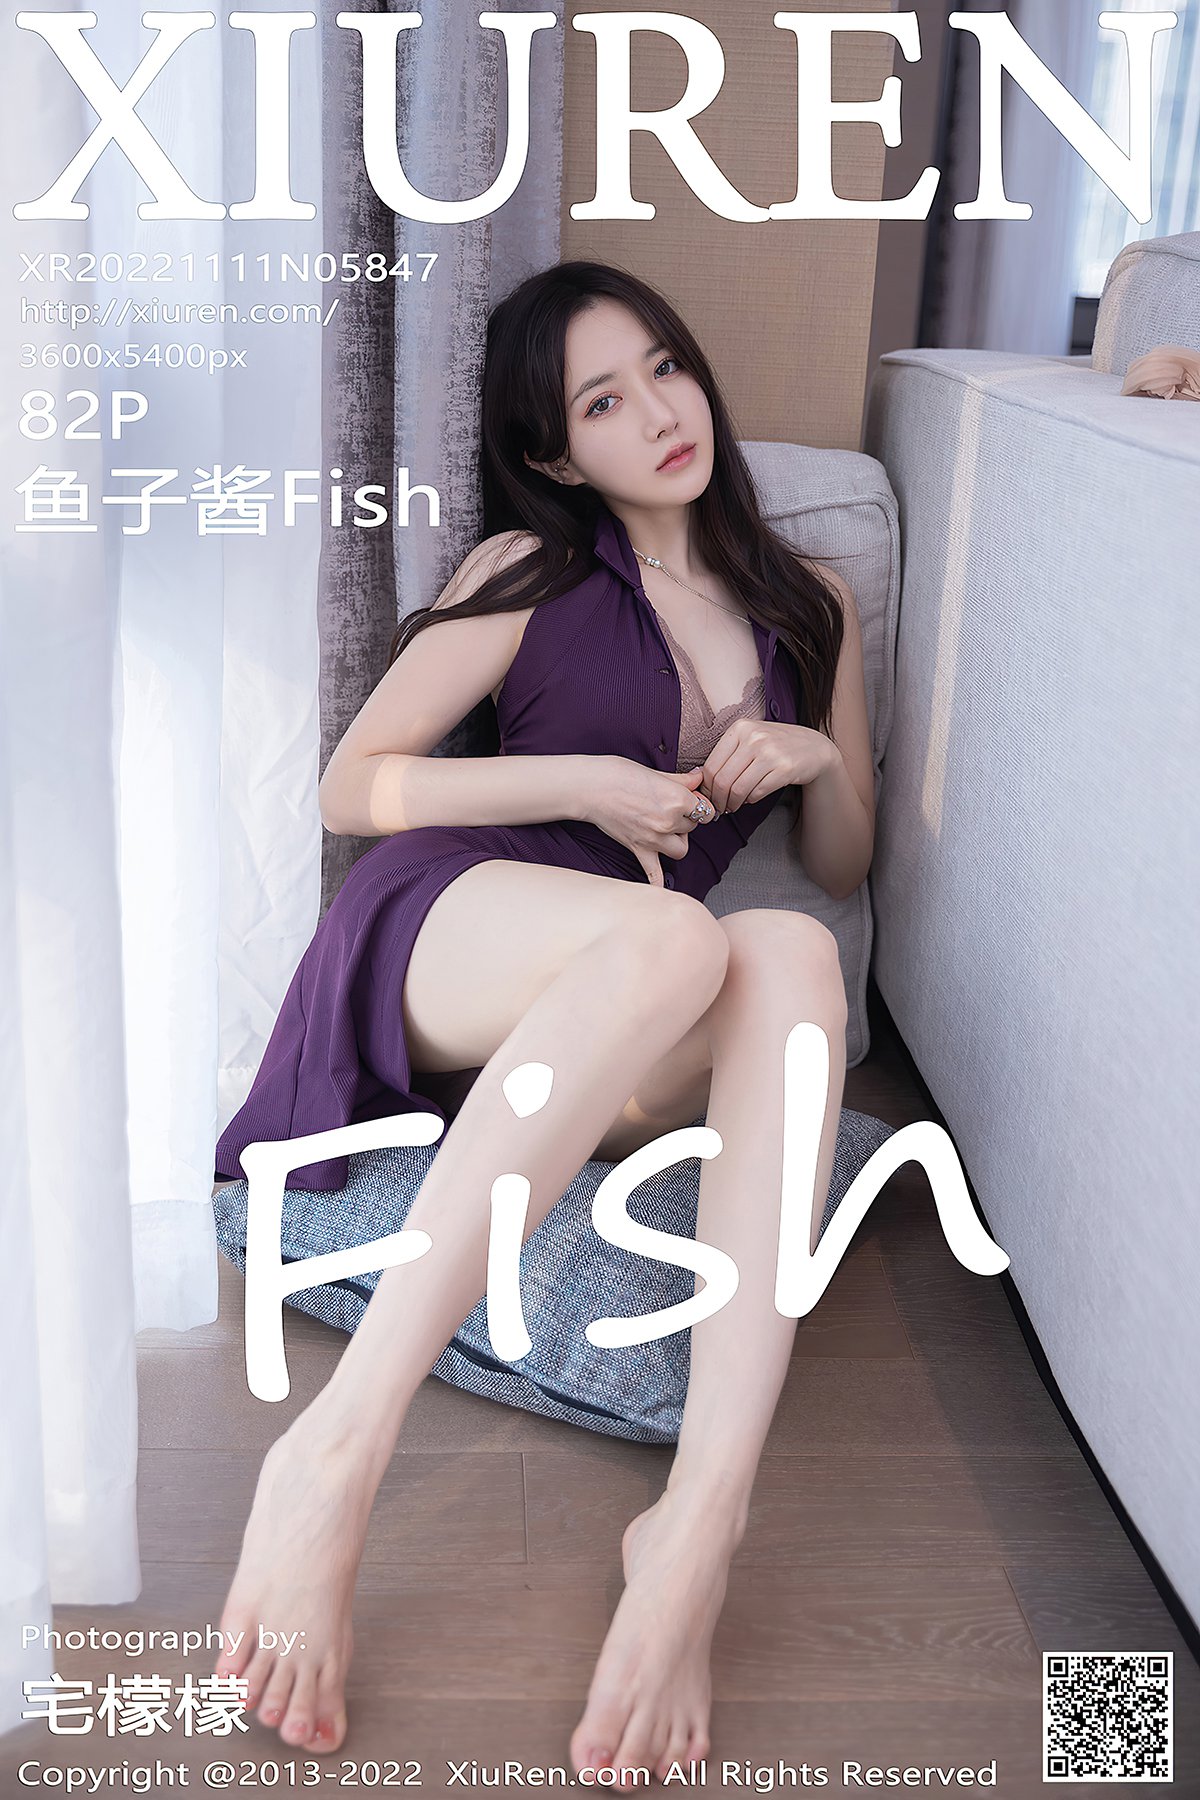 Xiuren fish